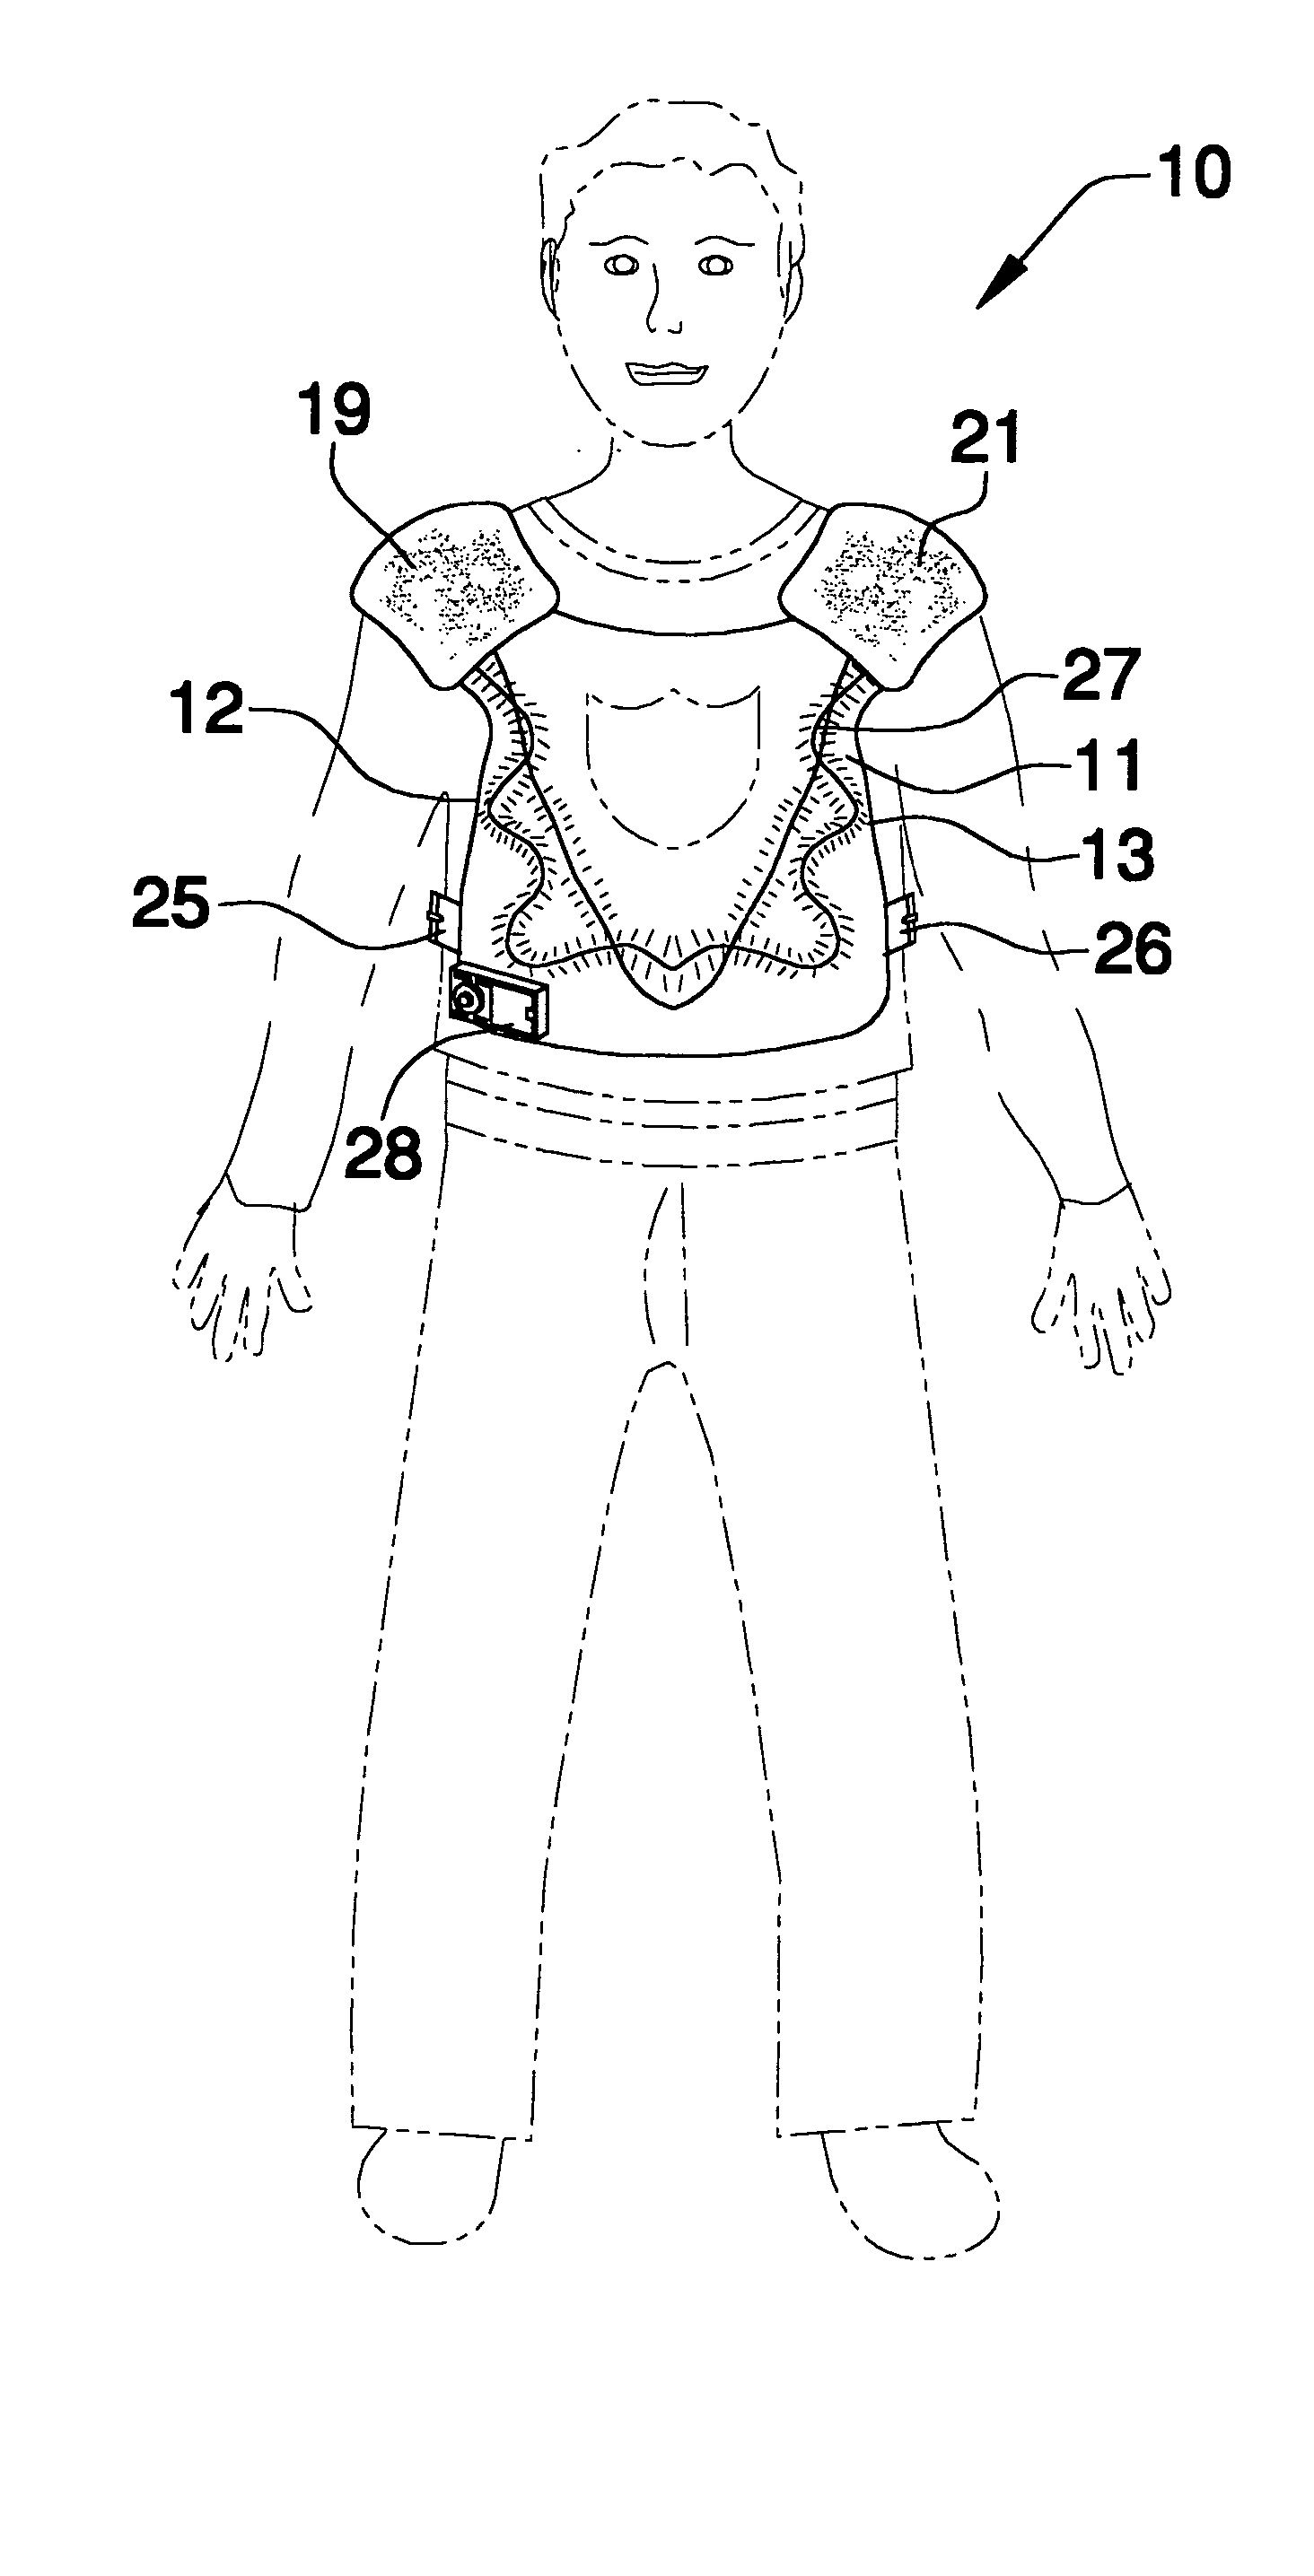 Illuminated chest protection device